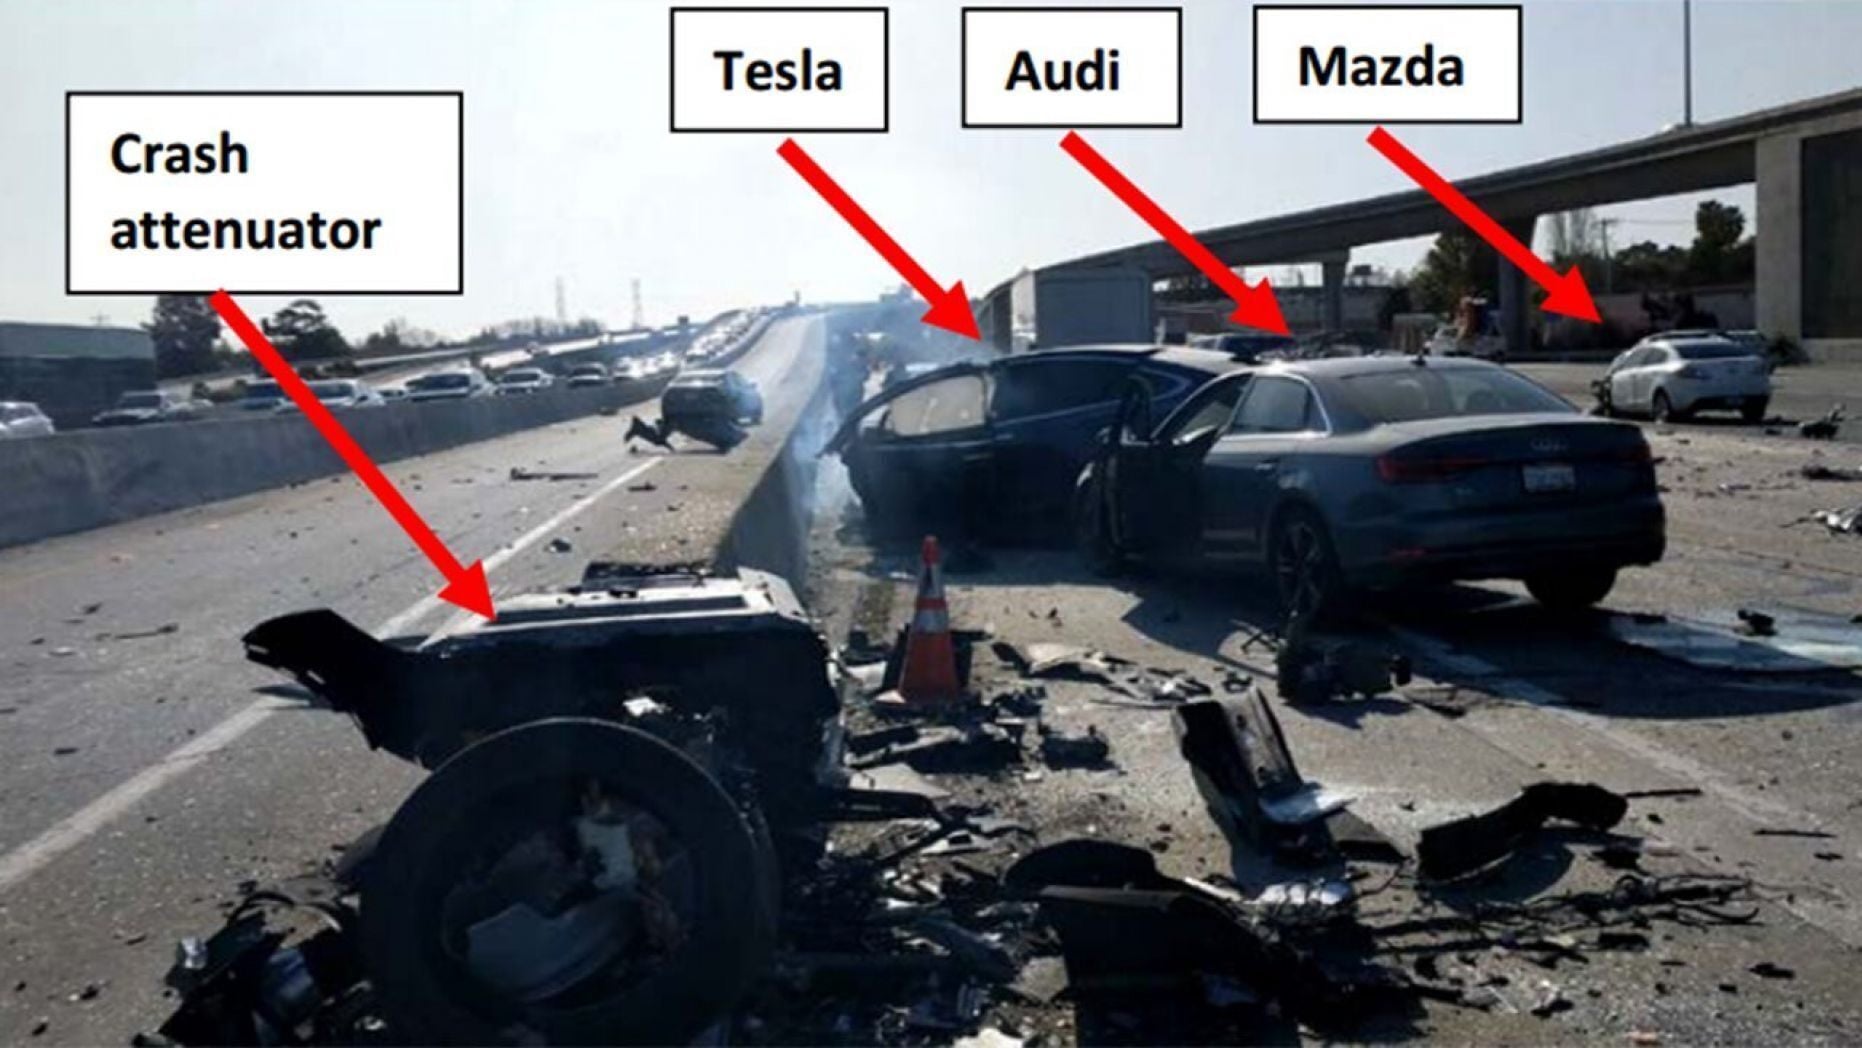 NTSB Releases Details of Two Tesla Autopilot Accidents